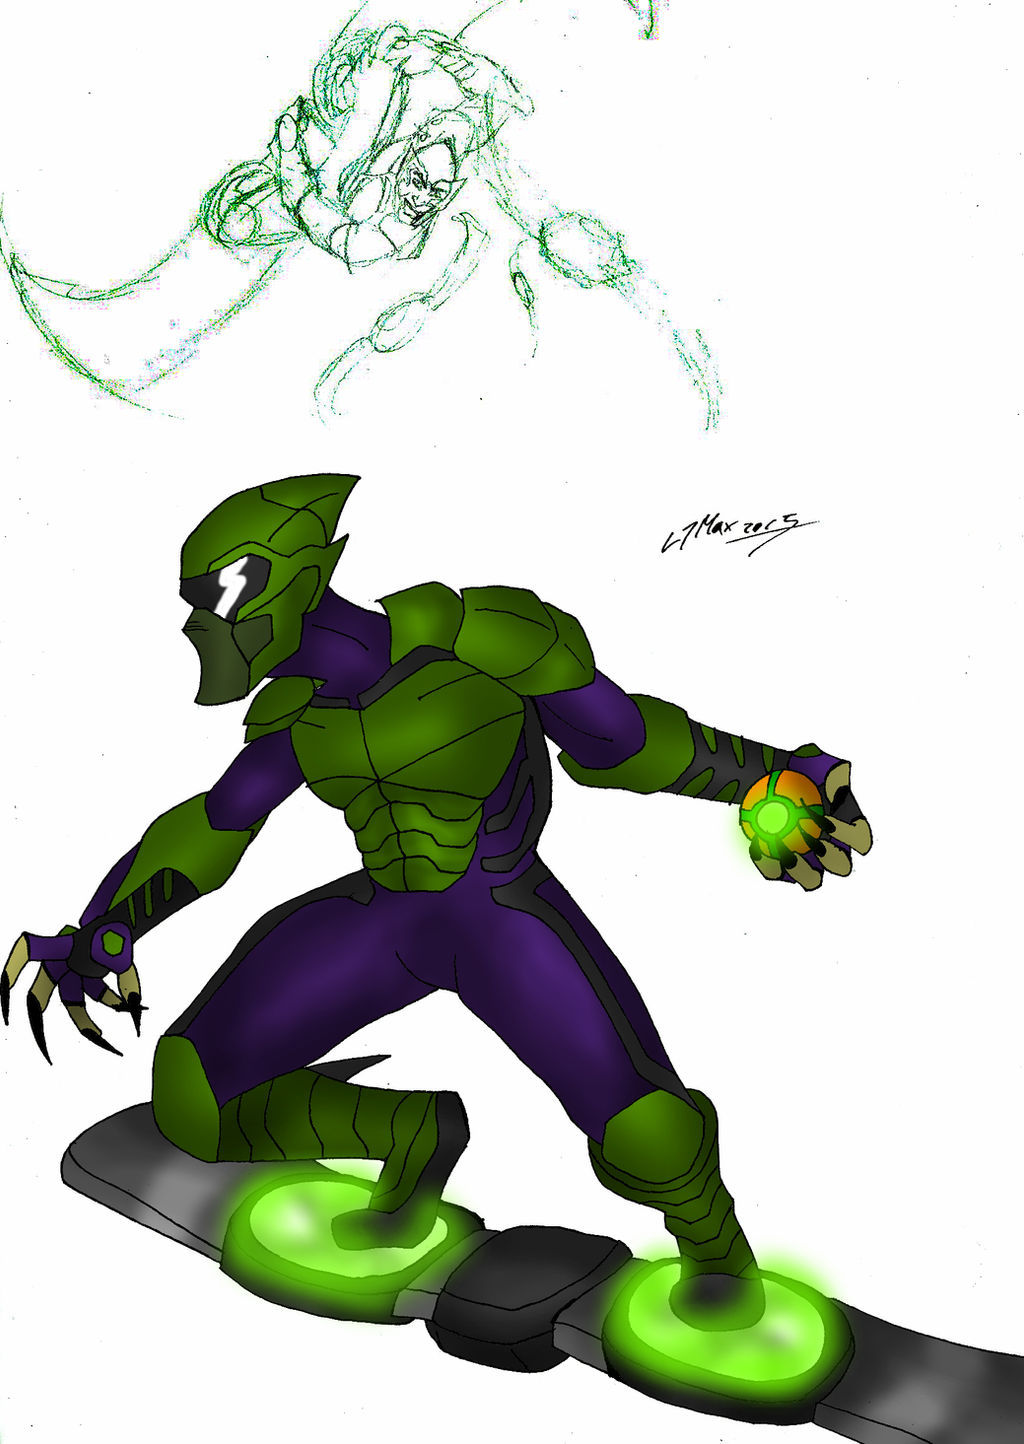 Uncanny Spider-Man: Green Goblin Concept Art by Hlontro on DeviantArt